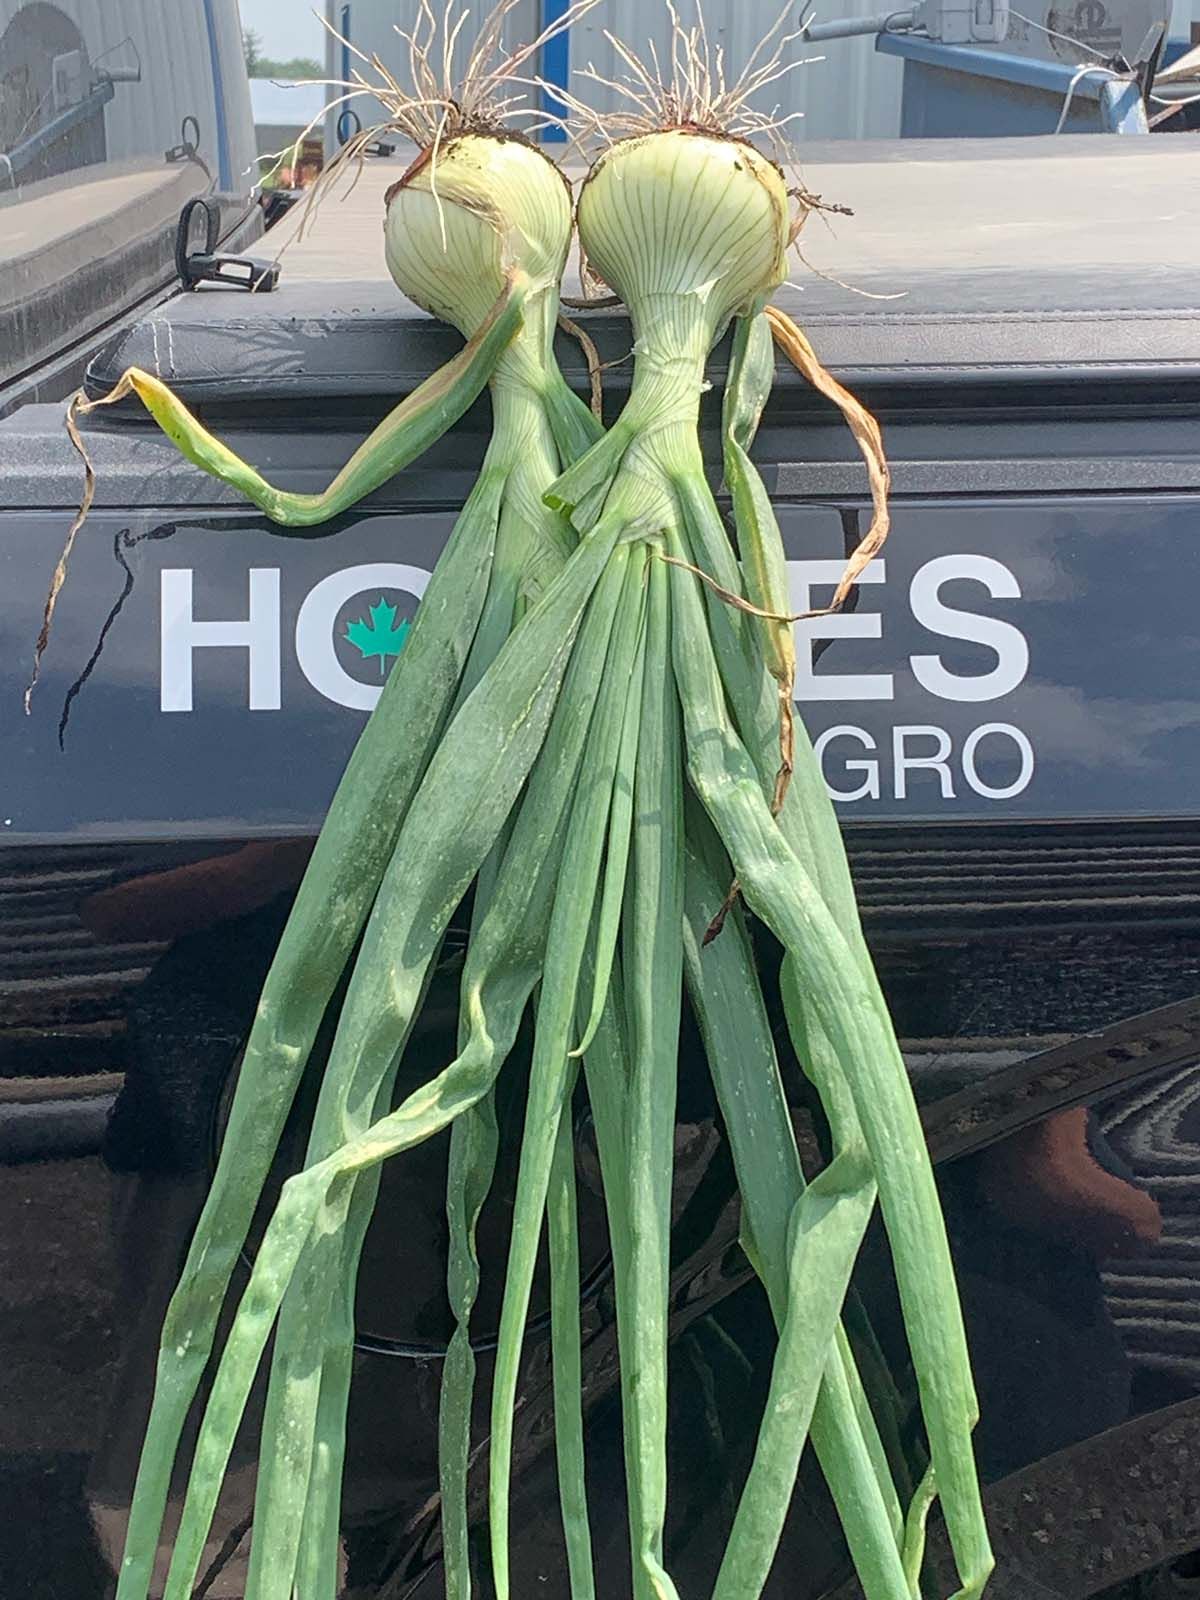 Holmes Agro onions